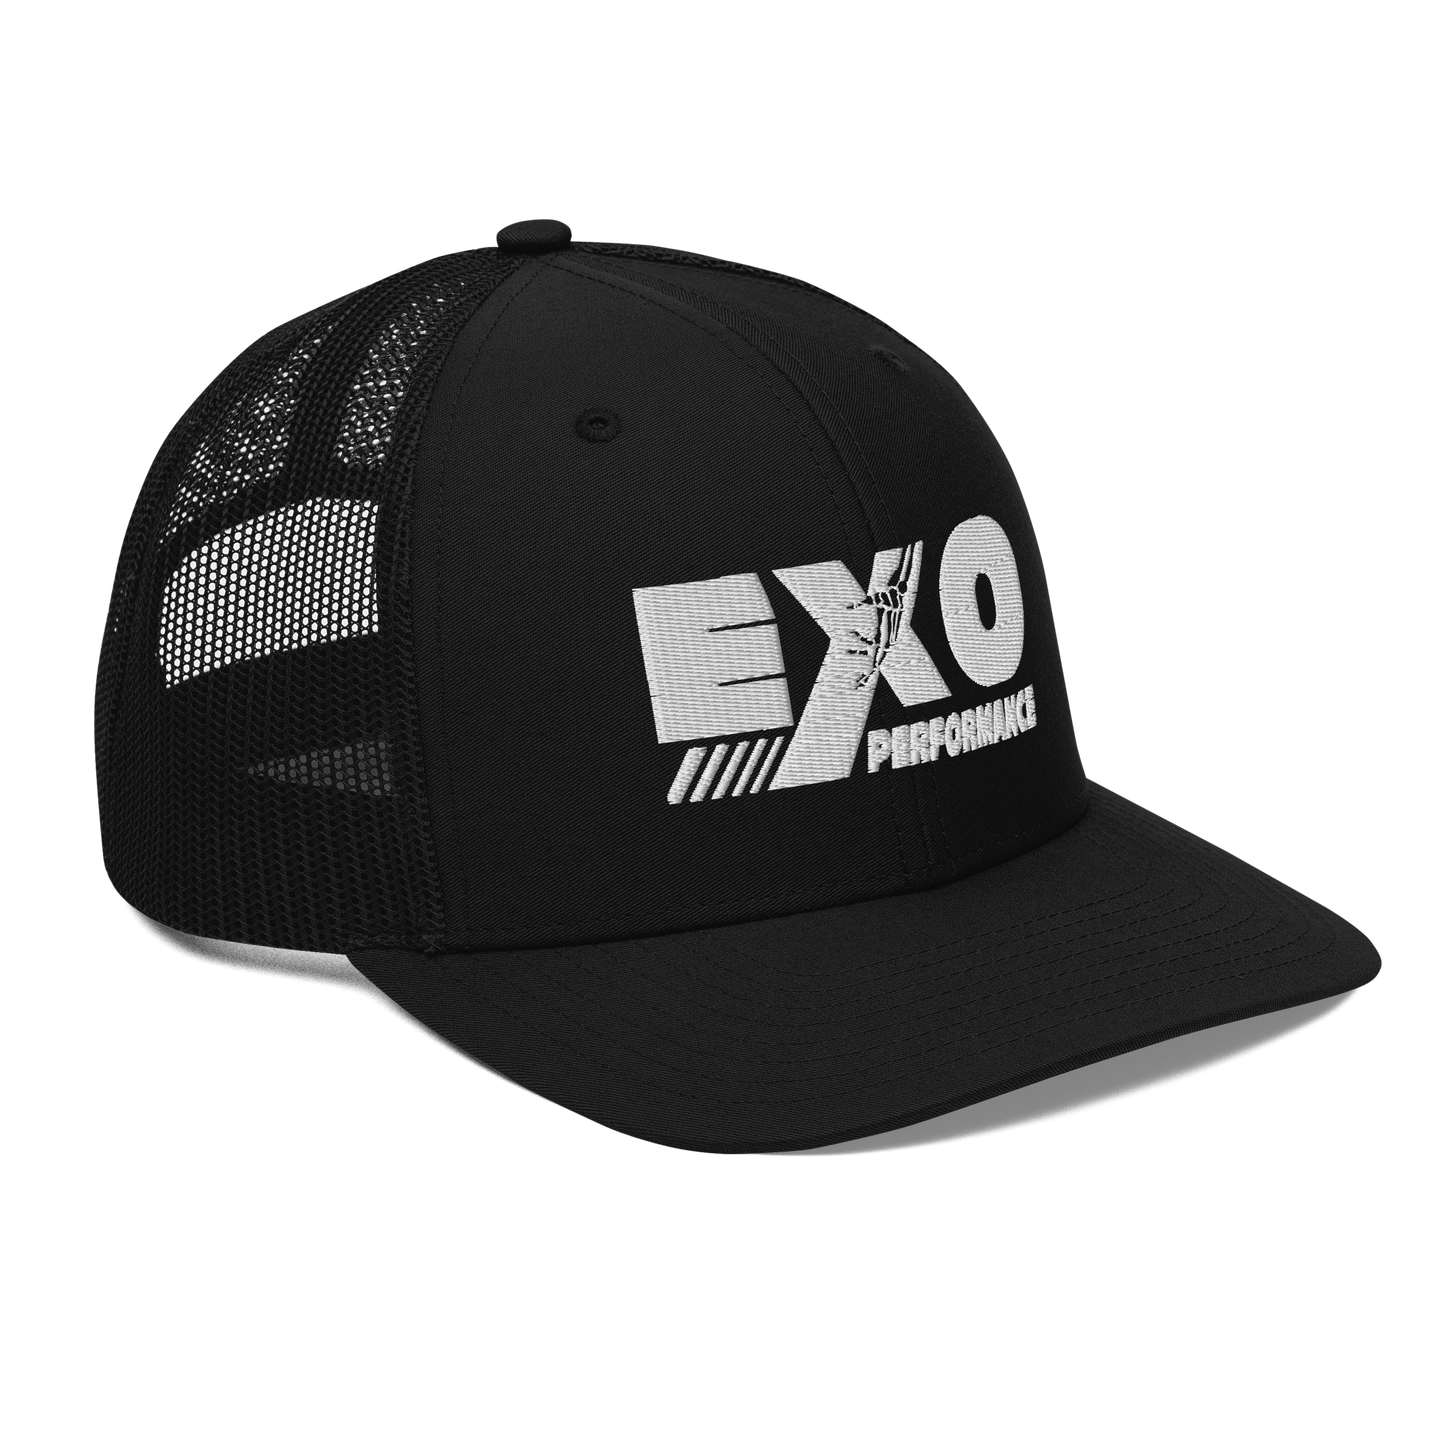 THE EXO Logo Hat